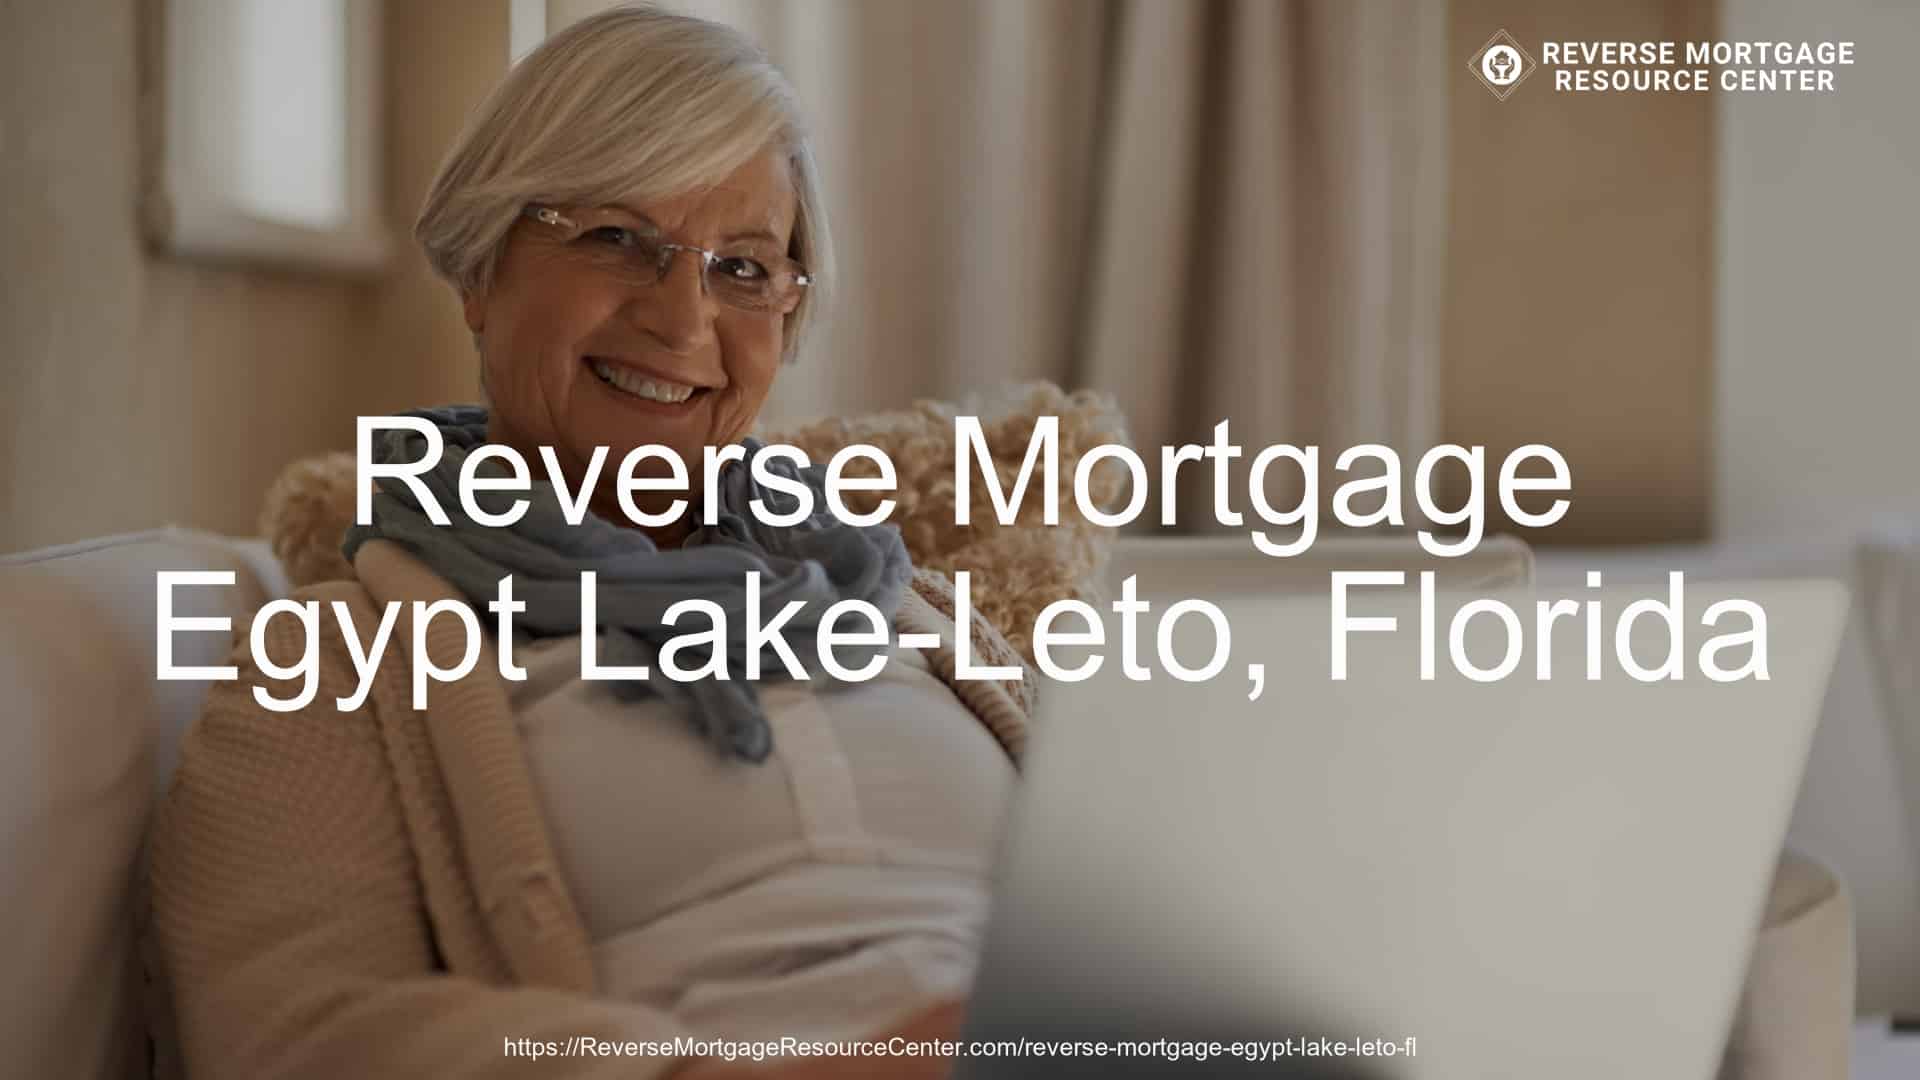 Reverse Mortgage Loans in Egypt Lake-Leto Florida